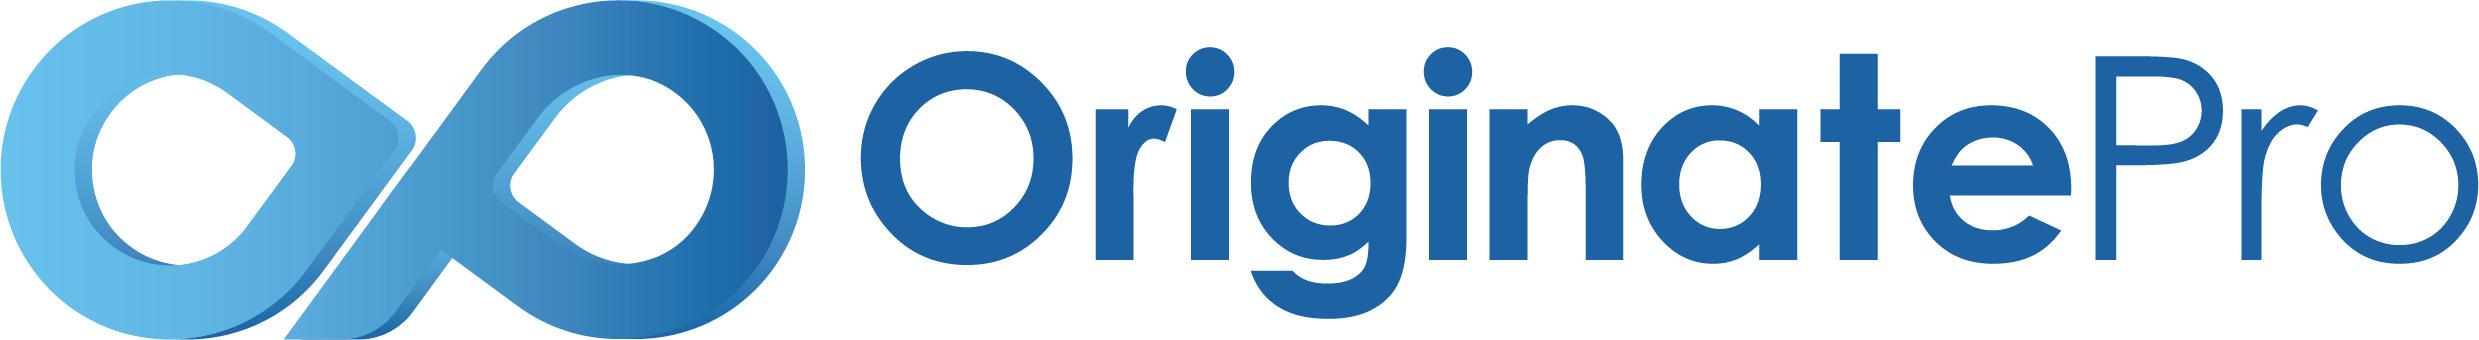 OriginatePro Logo